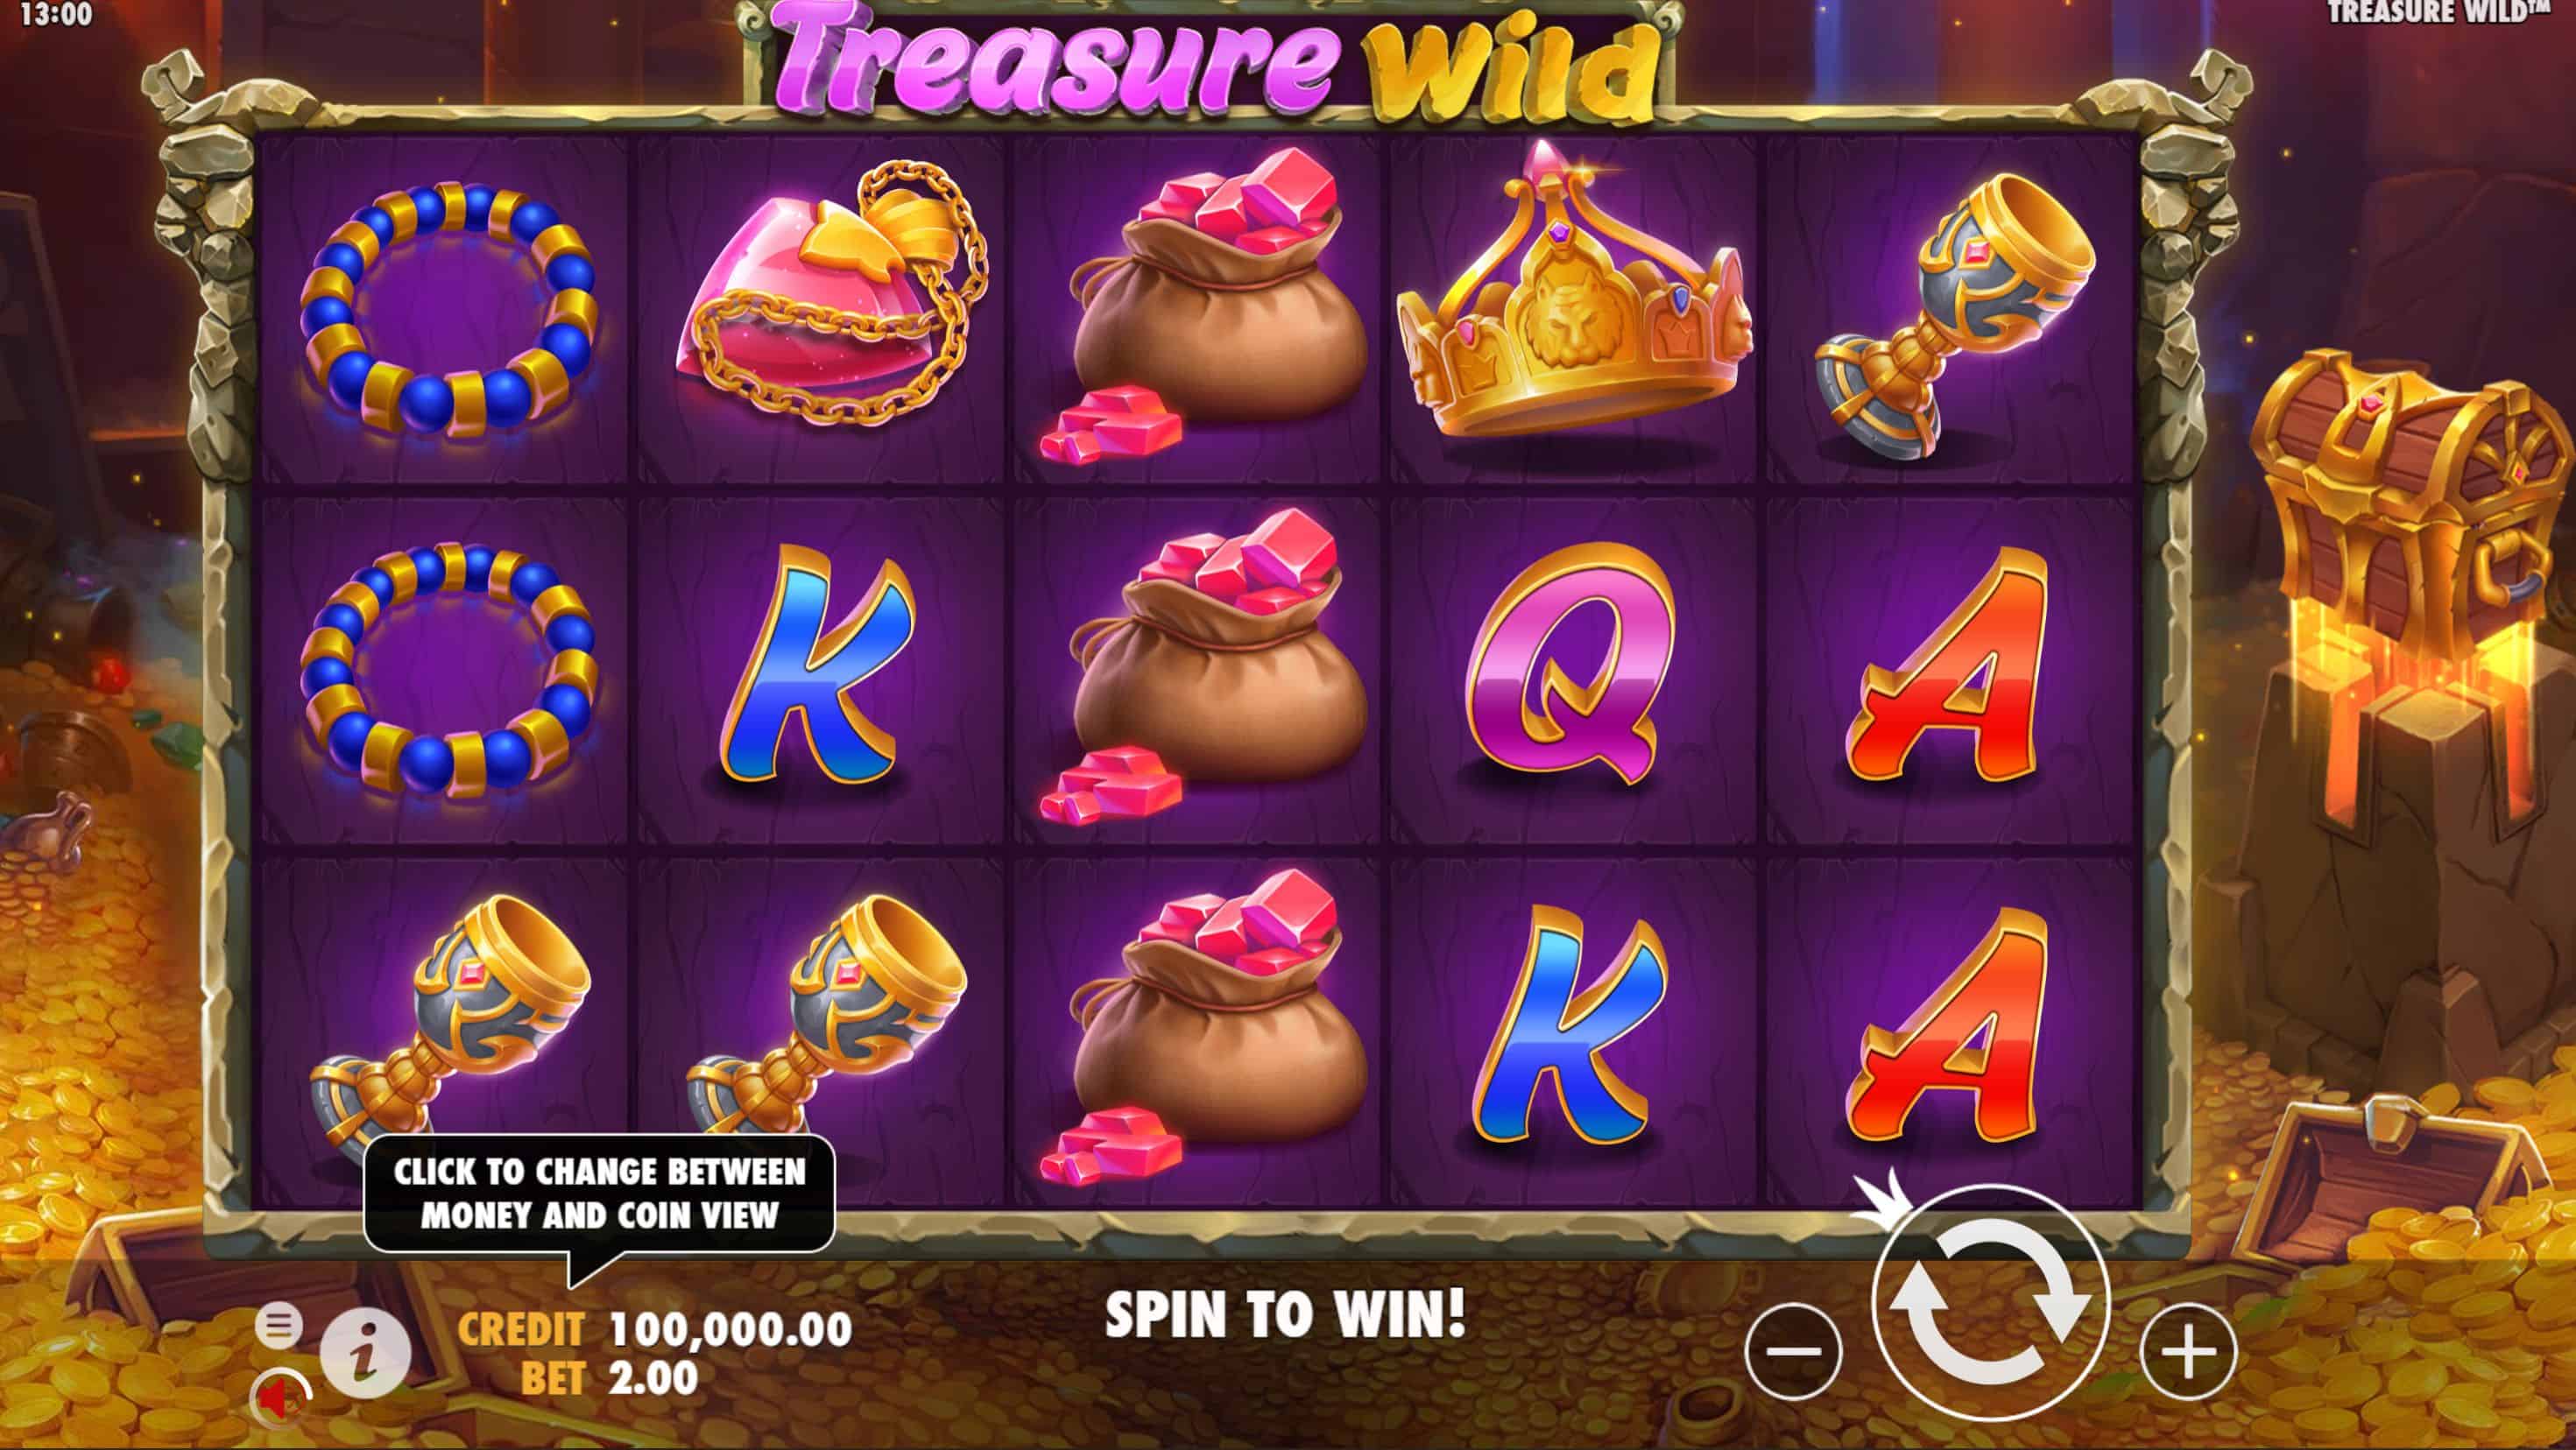 Treasure Wild Slot Game Free Play at Casino Ireland 01